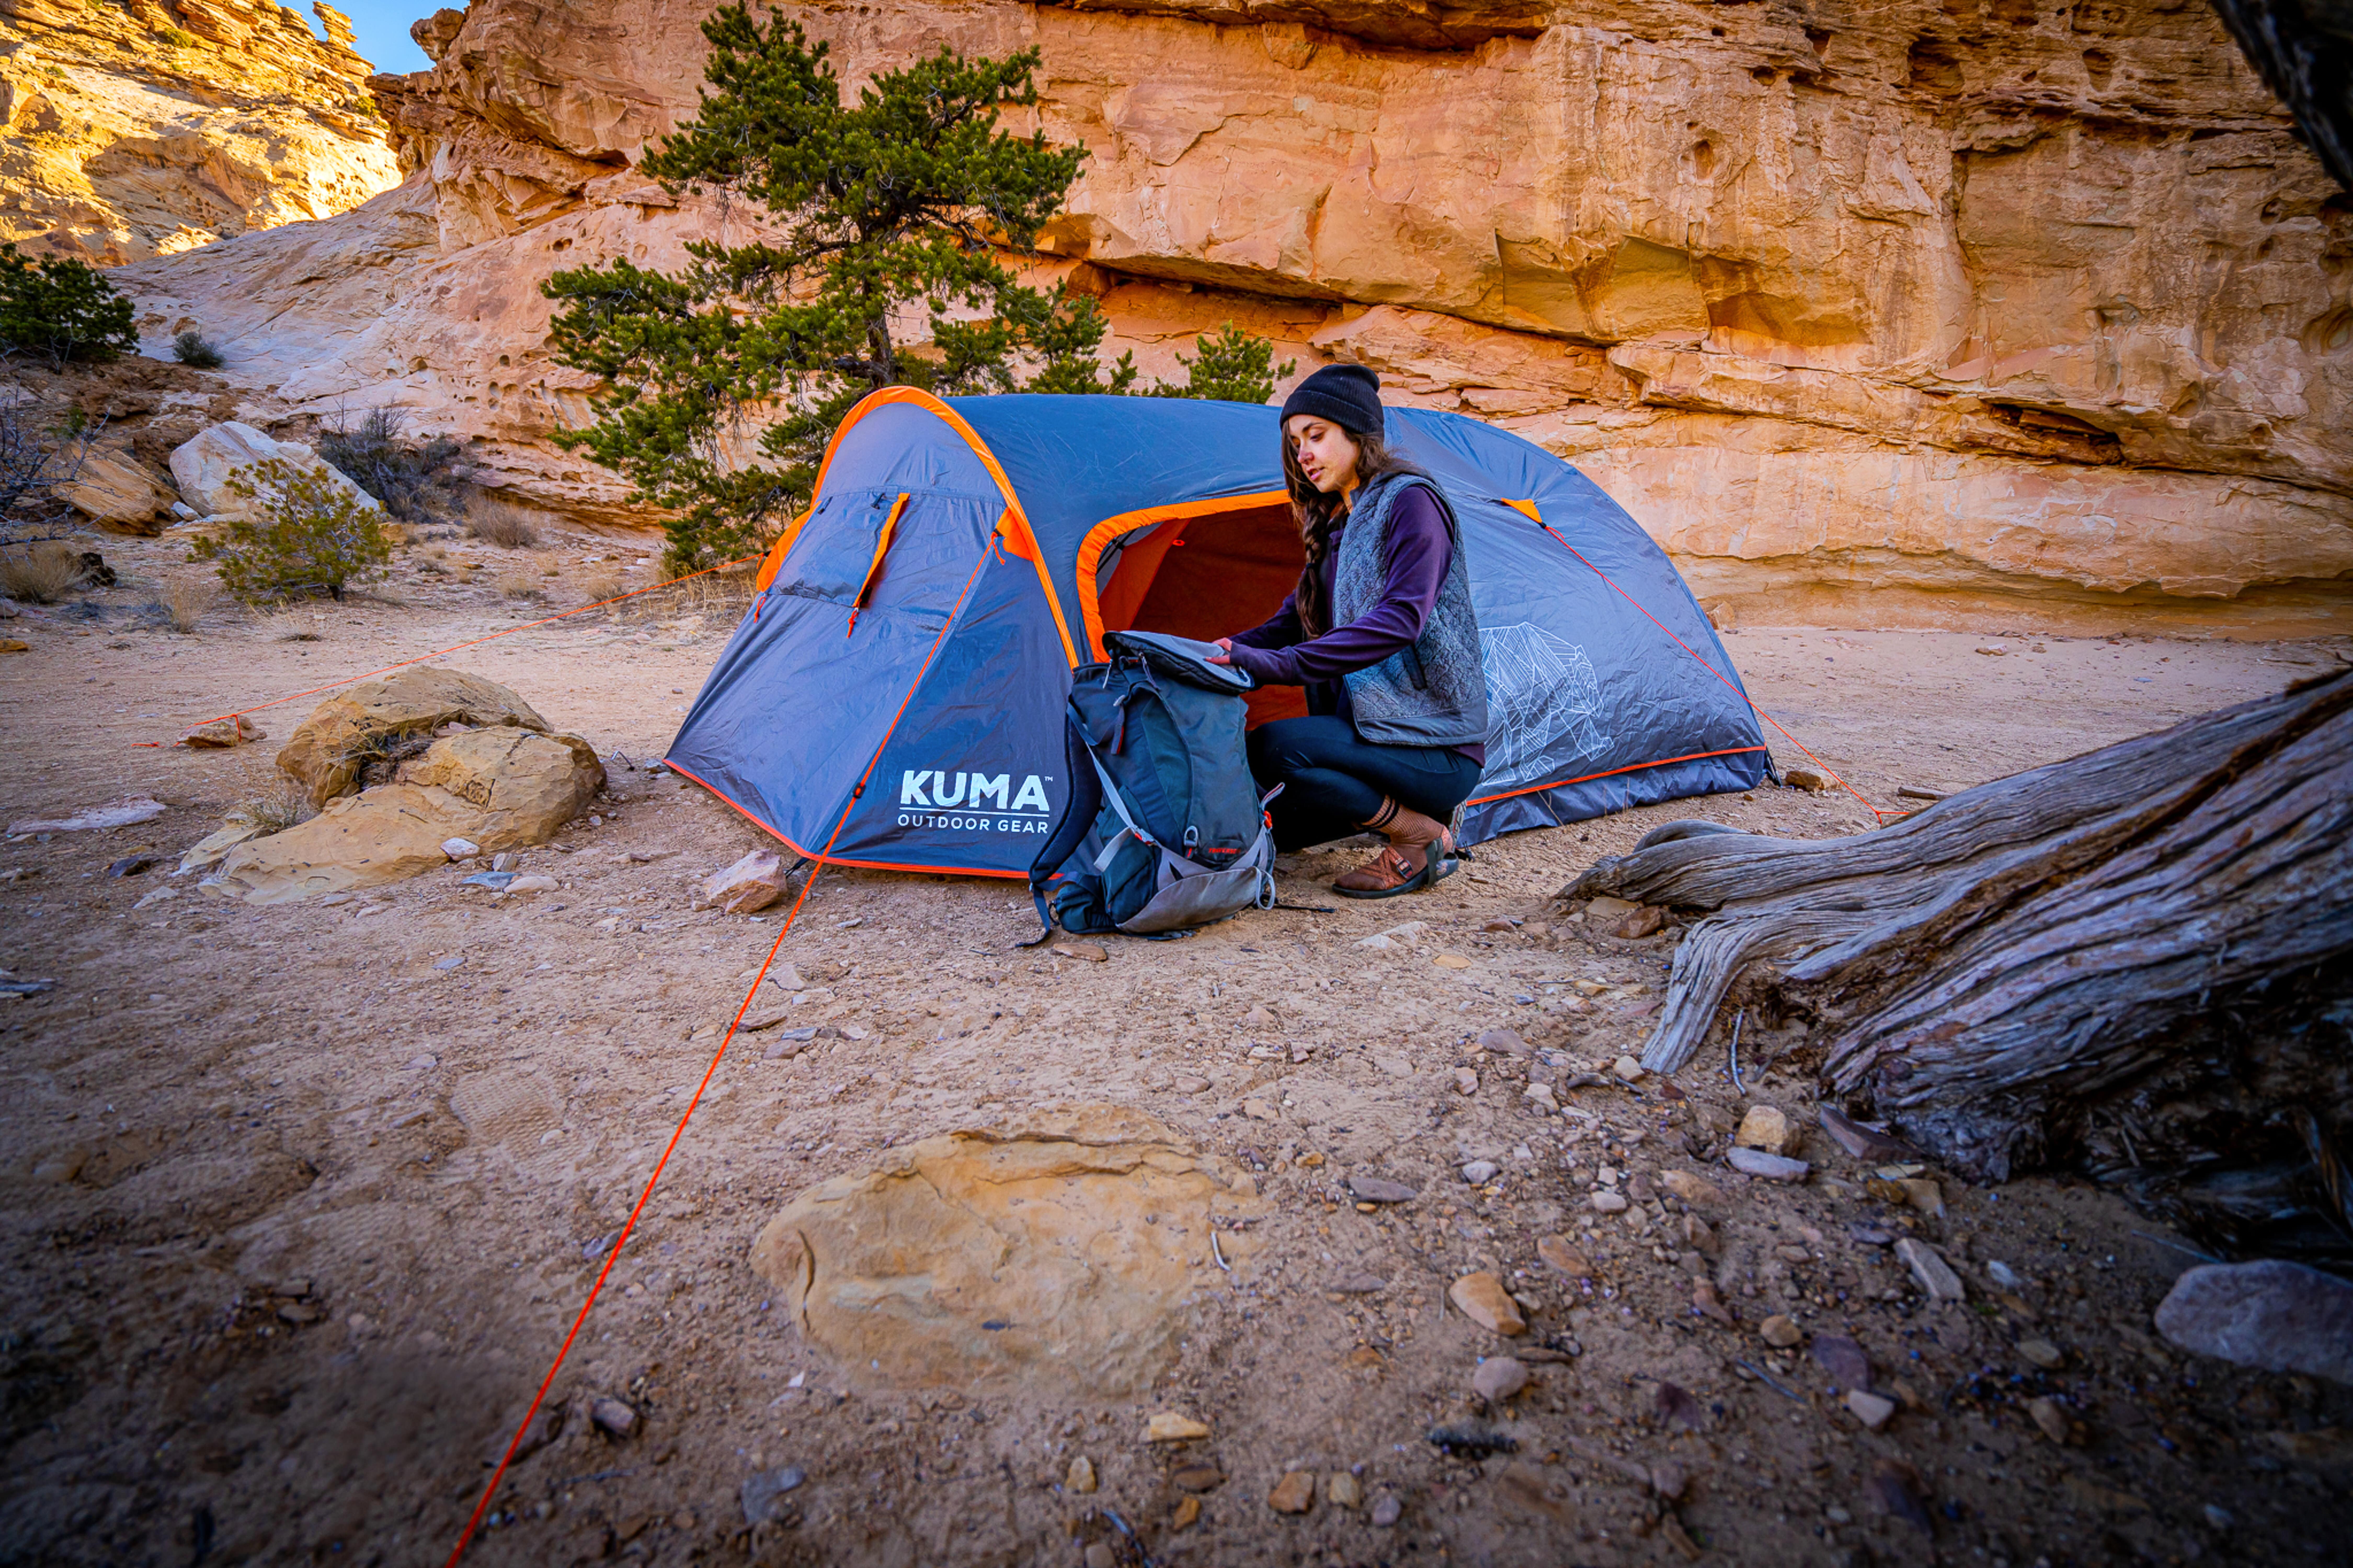 Kuma outdoor camper